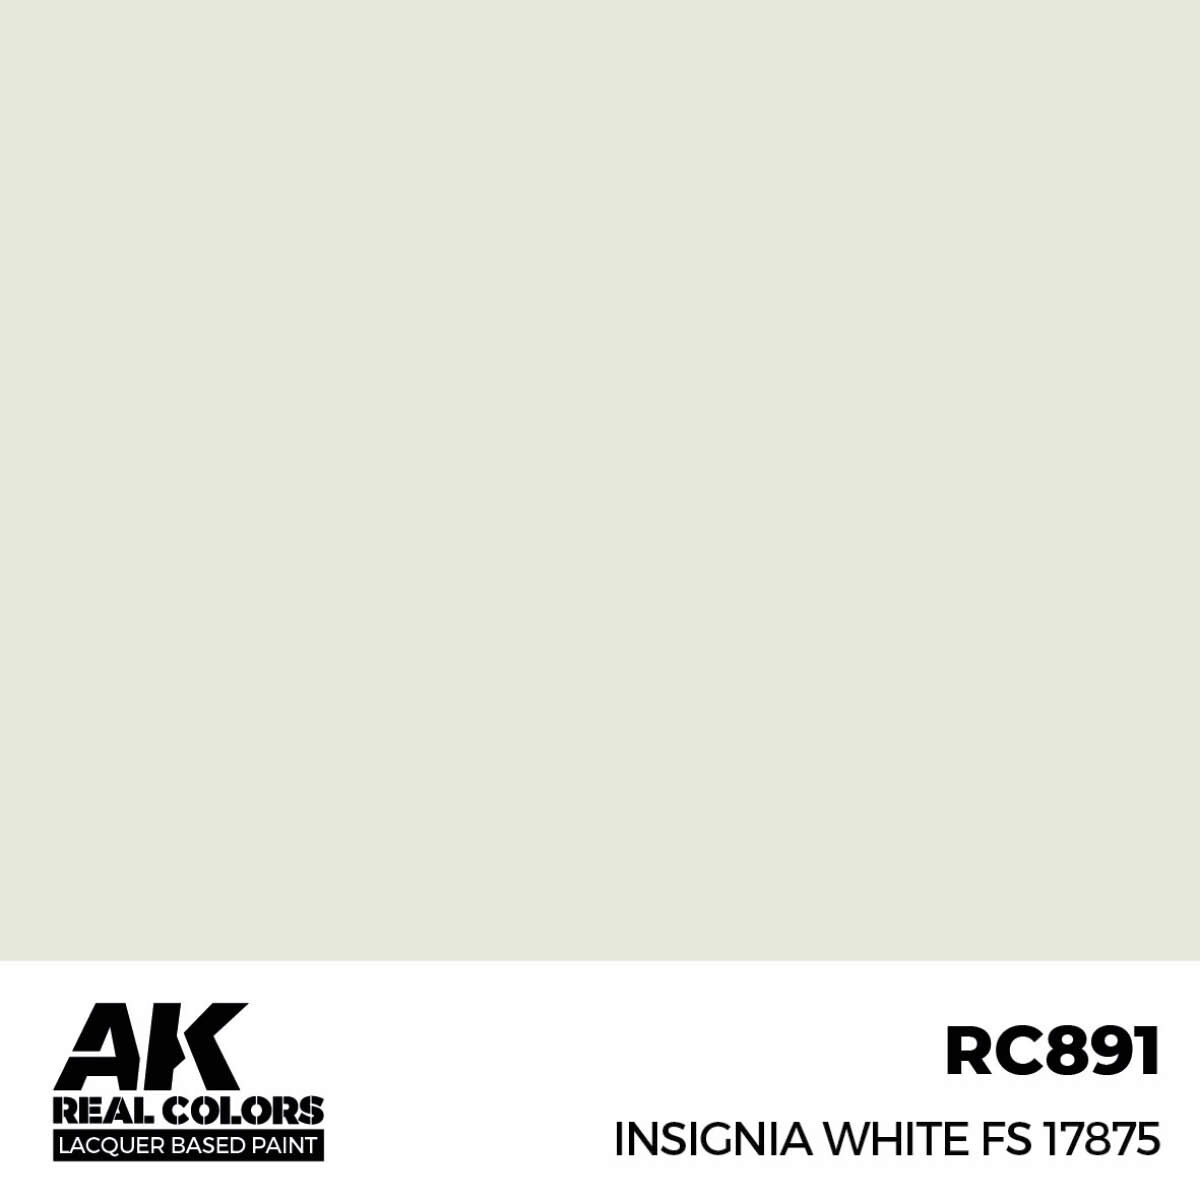 AK RC891 Real Colors Insignia White FS 17875 17 ml.